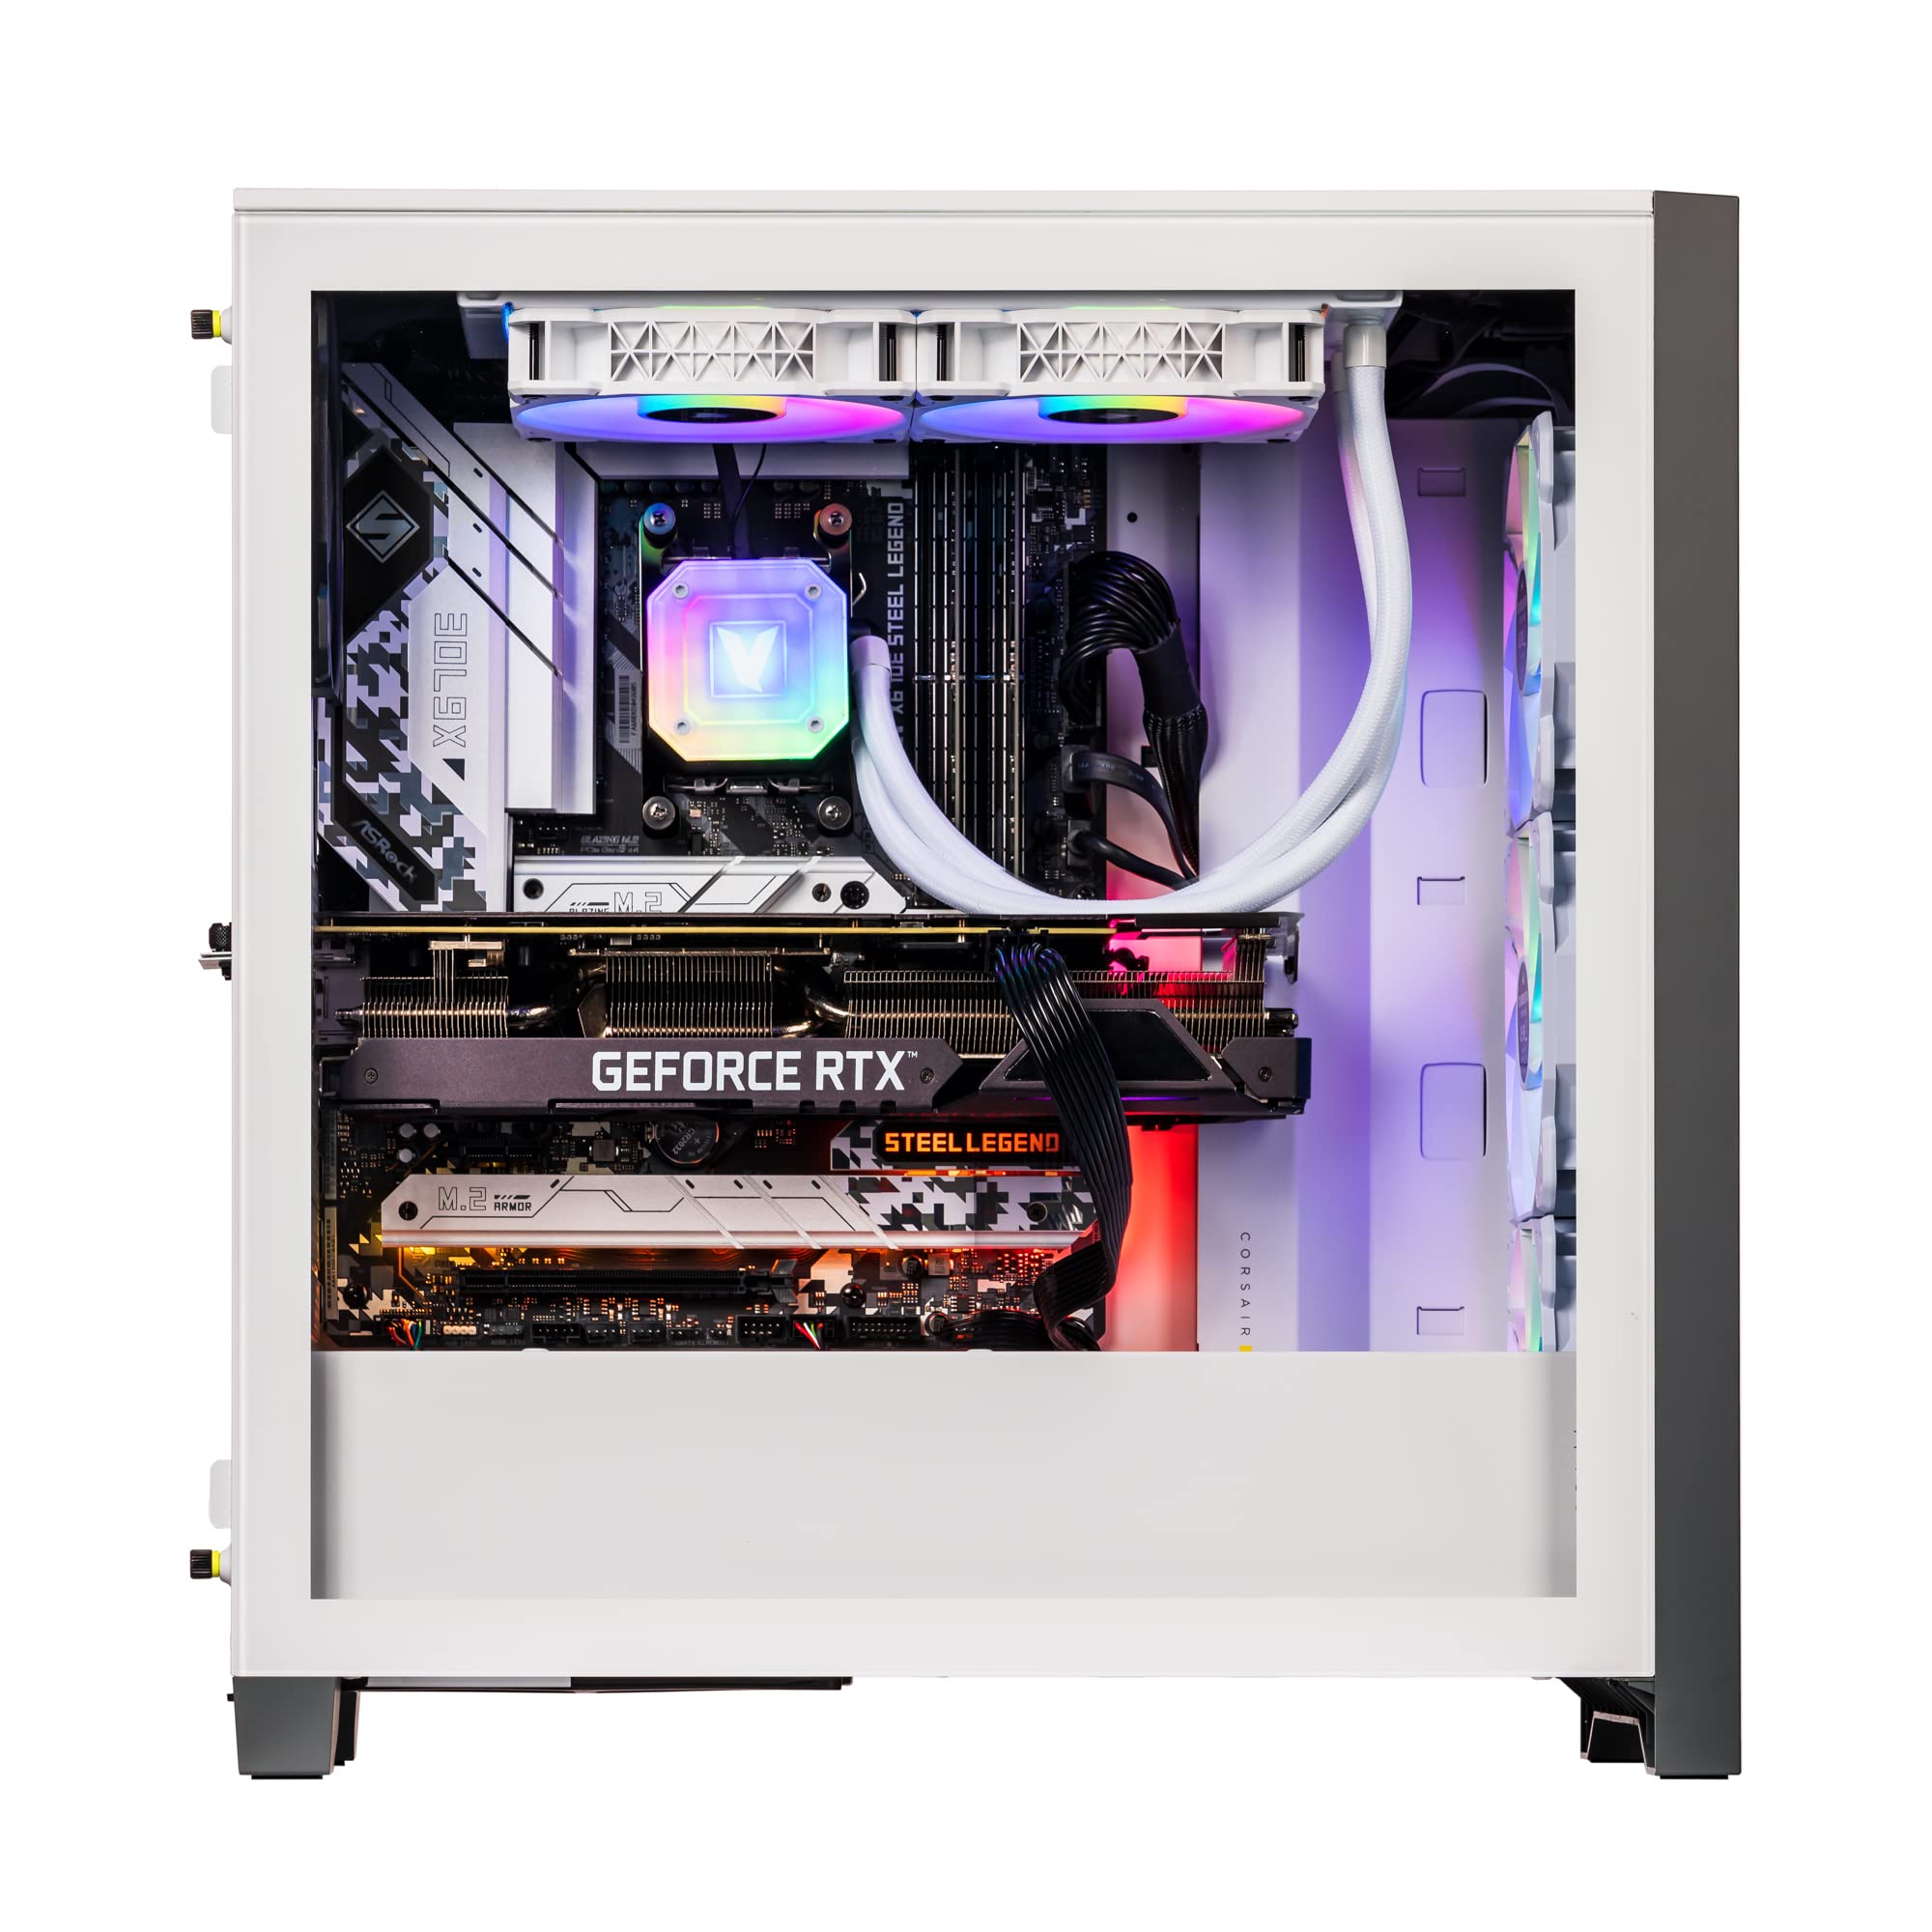 Velztorm White Armix Prebuilt Gaming Desktop PC (AMD Ryzen 9 7900X 12-Core 4.7GHz, GeForce RTX 3060 12GB, 64GB DDR5, 1TB PCIe SSD + 2TB HDD (3.5), 240mm AIO, 1000W PSU, Killer WiFi 6E, Win10Home)